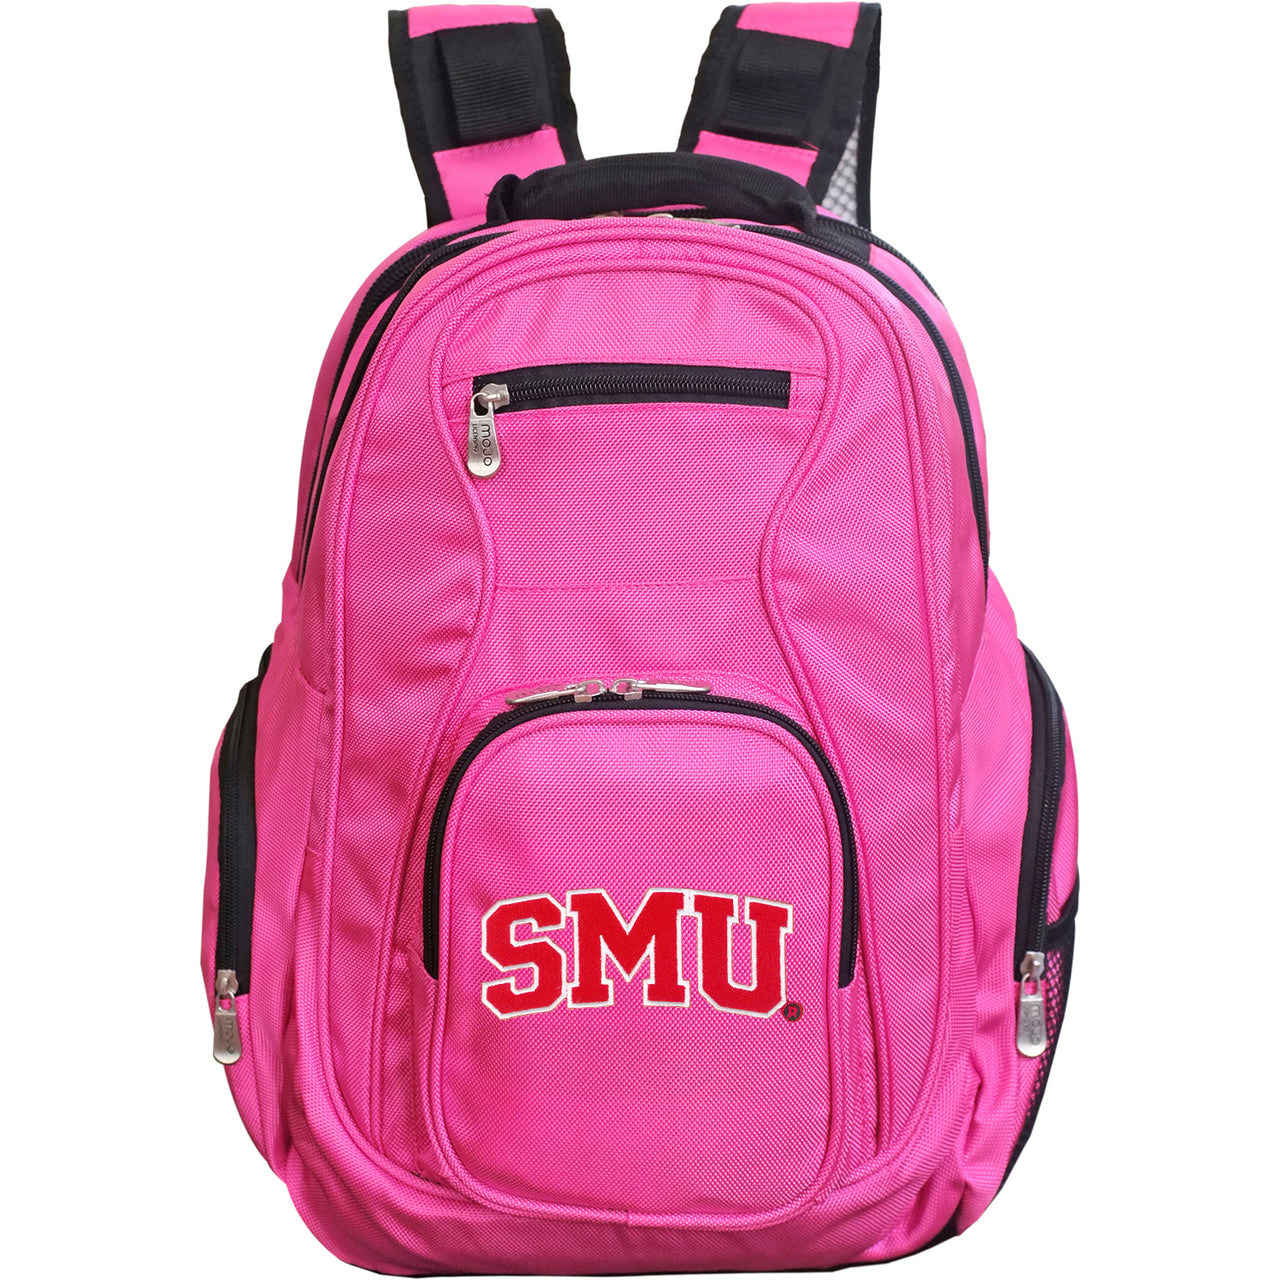 Southern Methodist Mustangs Laptop Backpack Pink